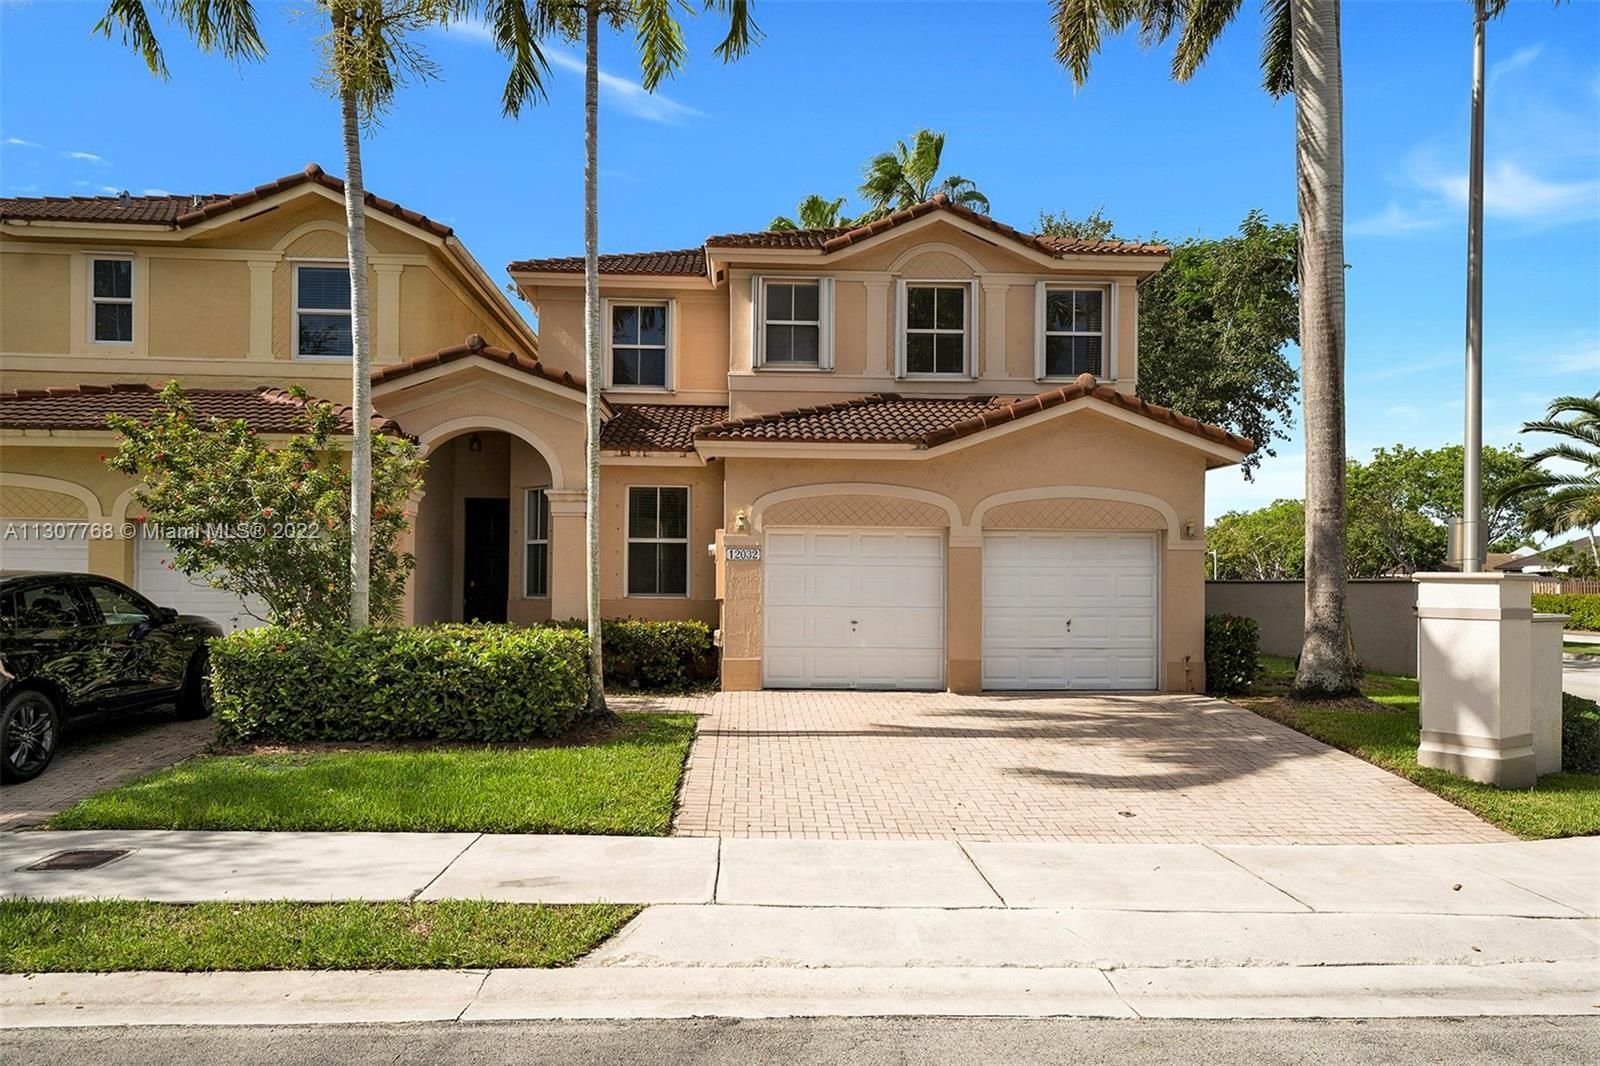 Real estate property located at 12032 123rd Ct, Miami-Dade County, Miami, FL